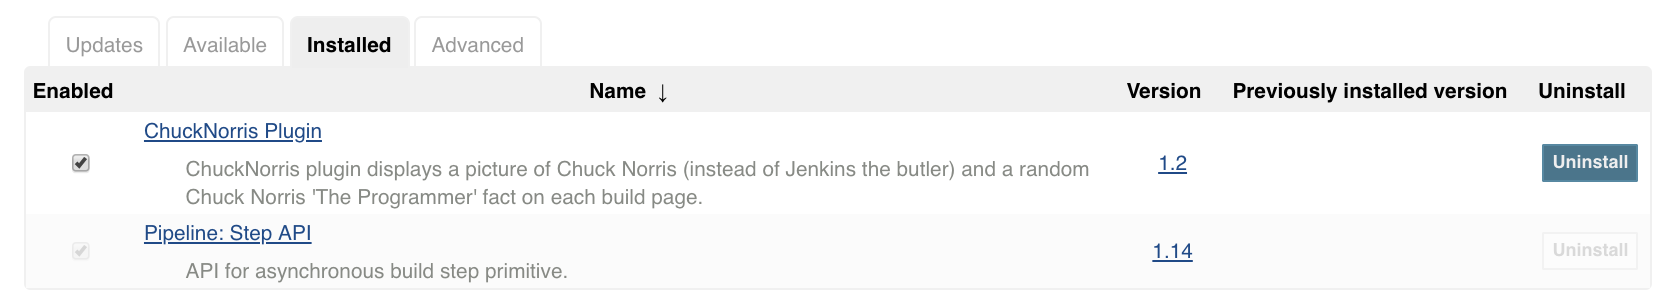 Plugin Installed in Jenkins